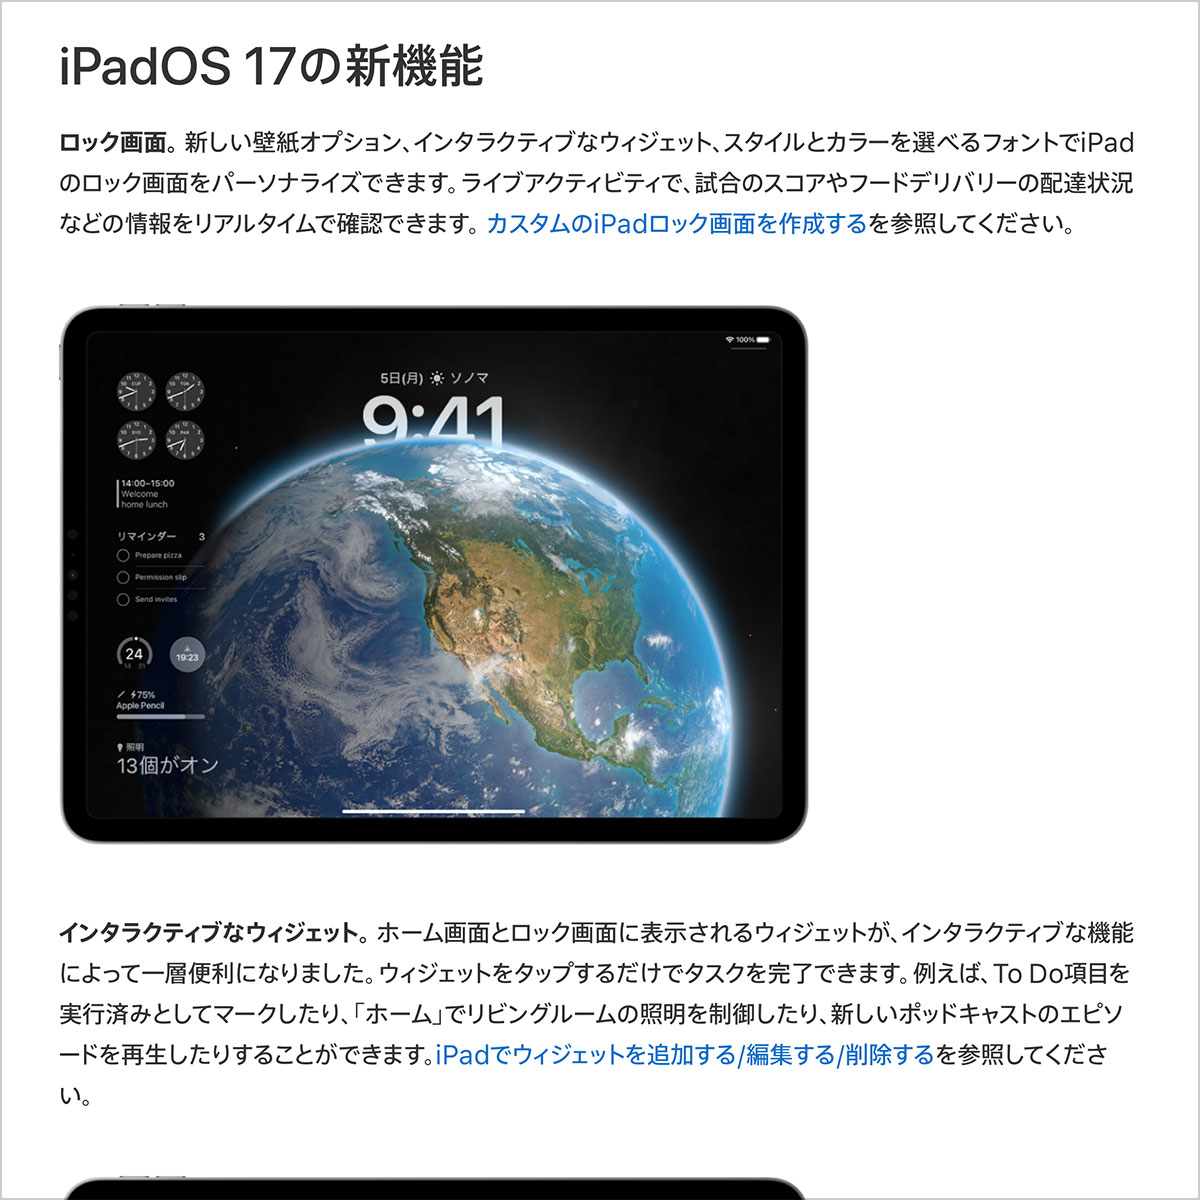 iPadユーザガイド iPadOS 17用